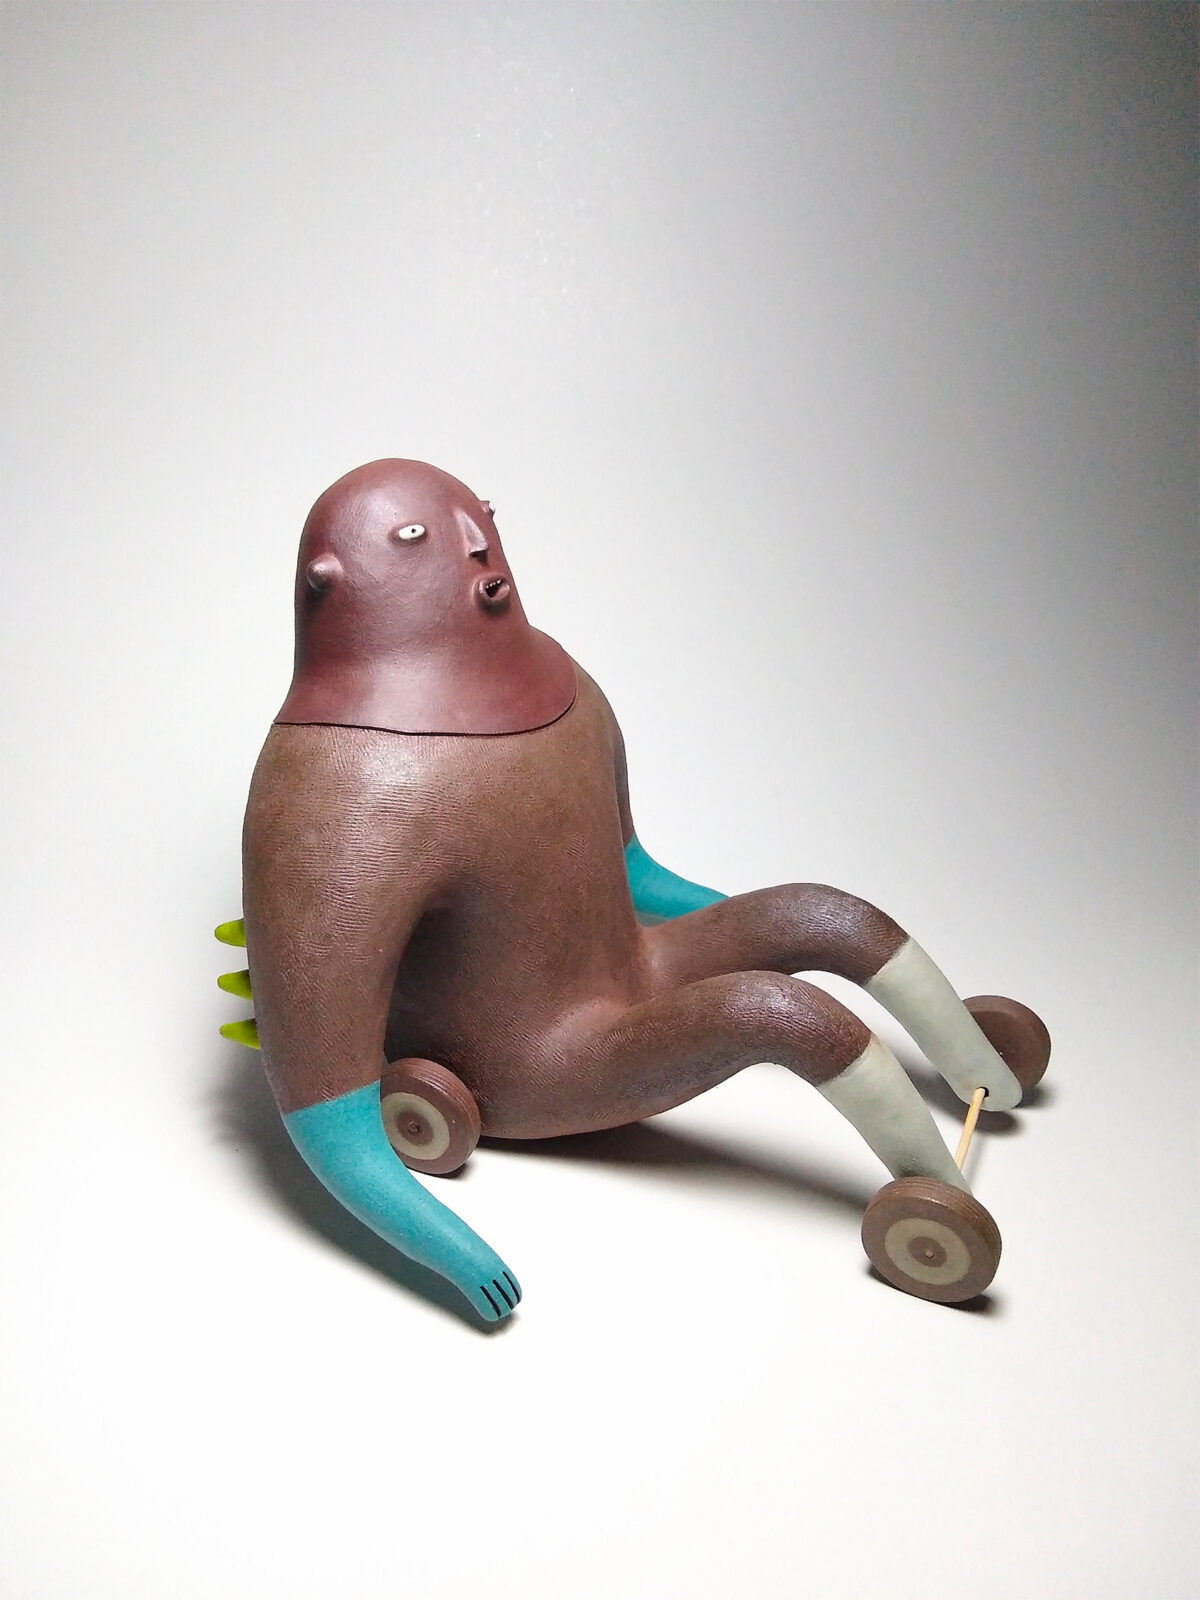 Amusing Ceramic Sculptures Of Quirky Creatures By Luciano Polverigiani (20)